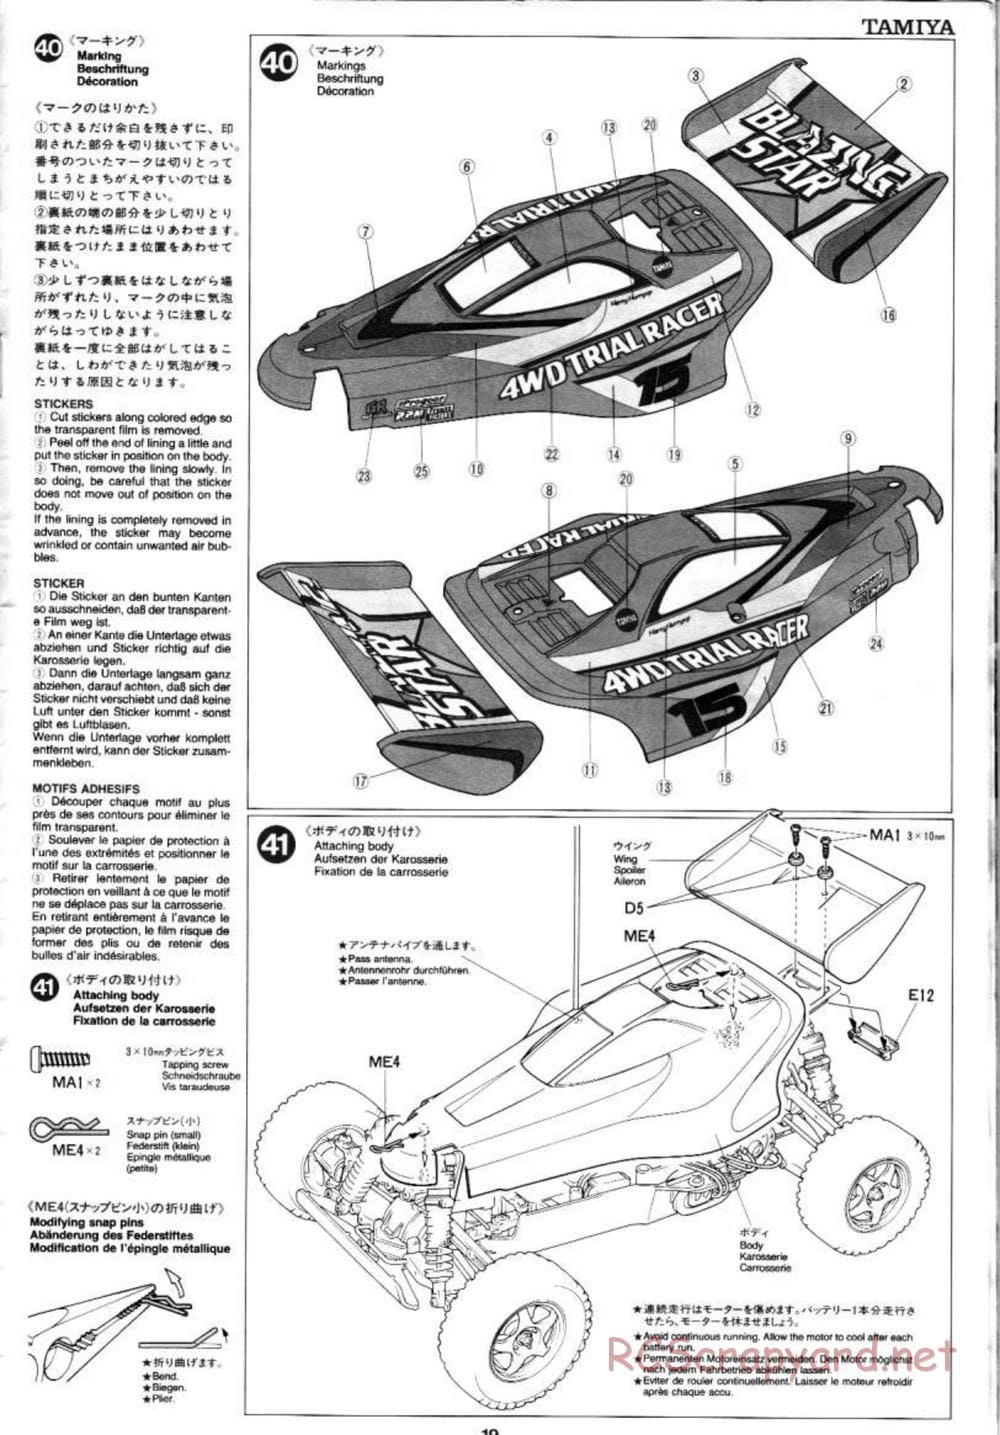 Tamiya - Blazing Star Chassis - Manual - Page 19